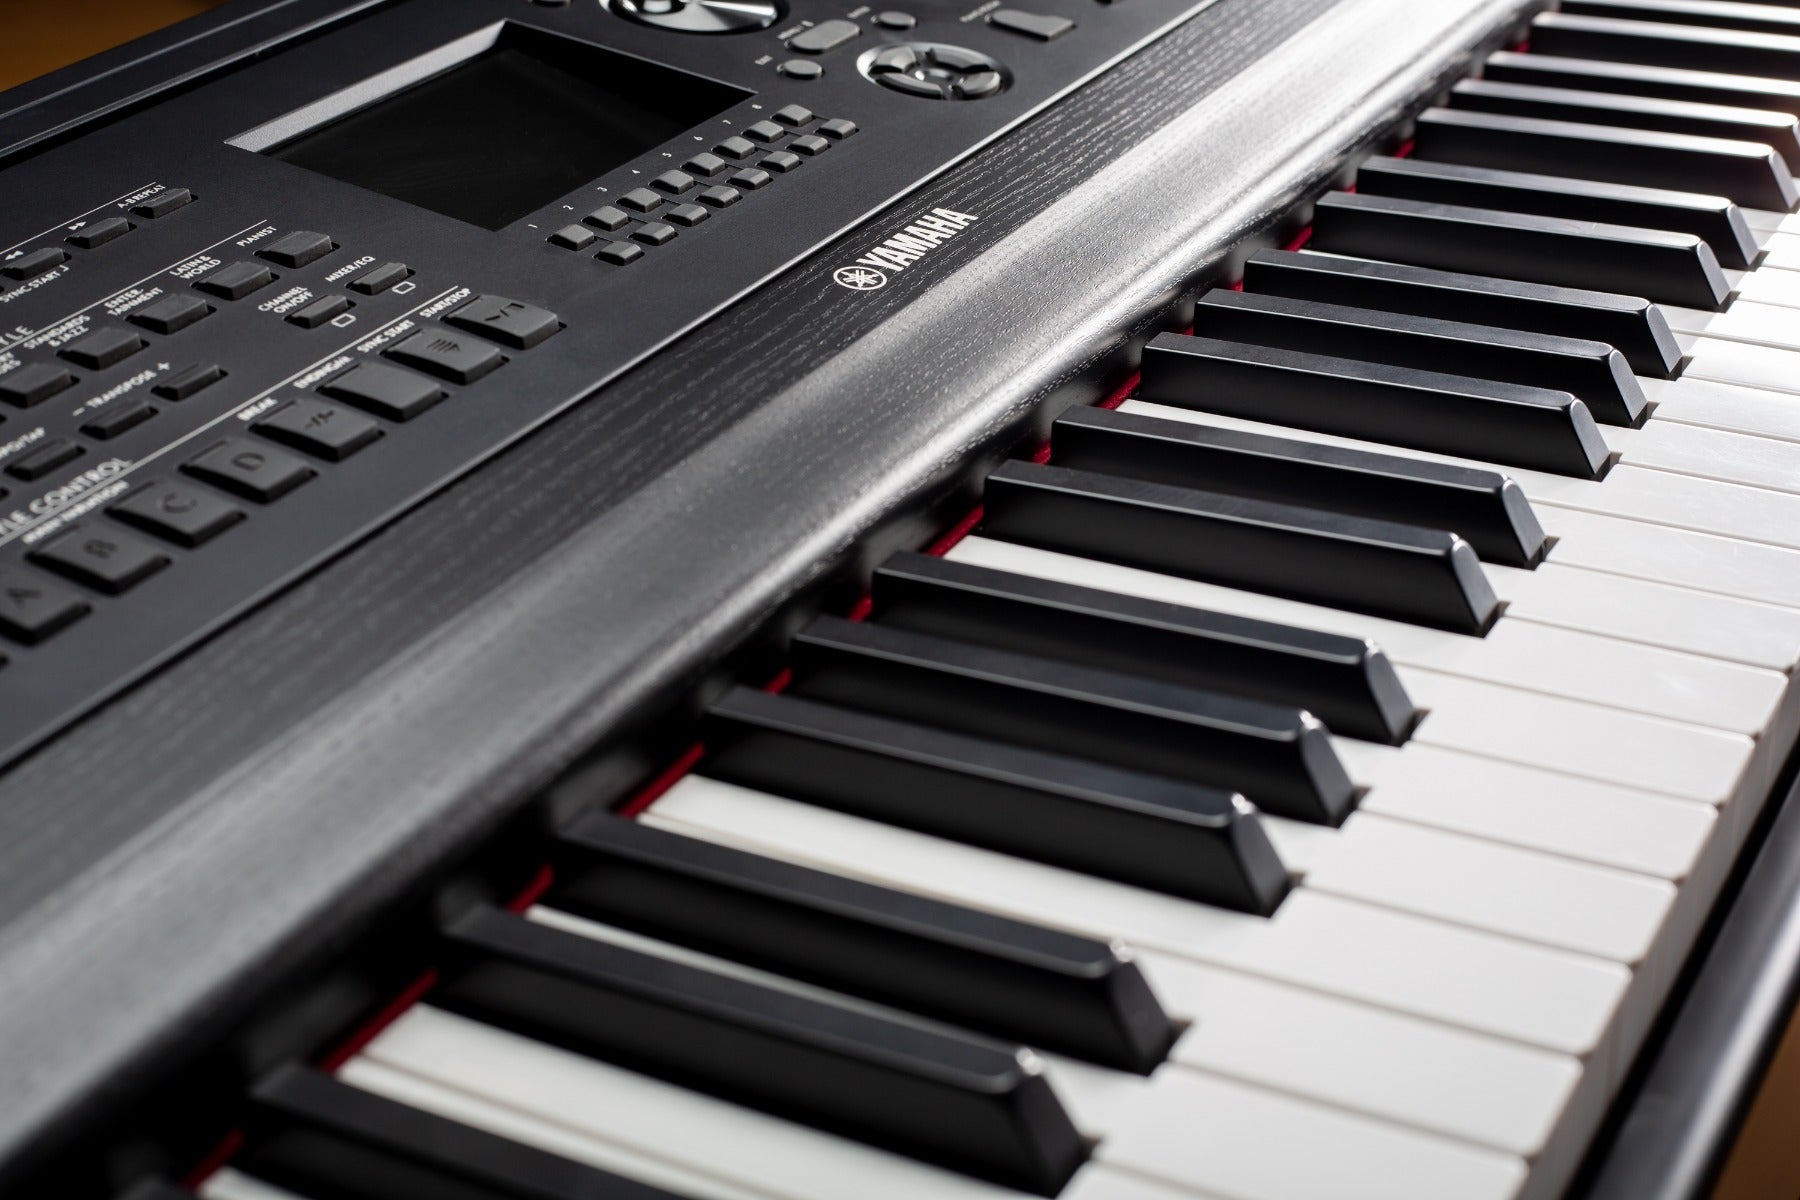 Close-up angle keyboard view of the Yamaha DGX-670